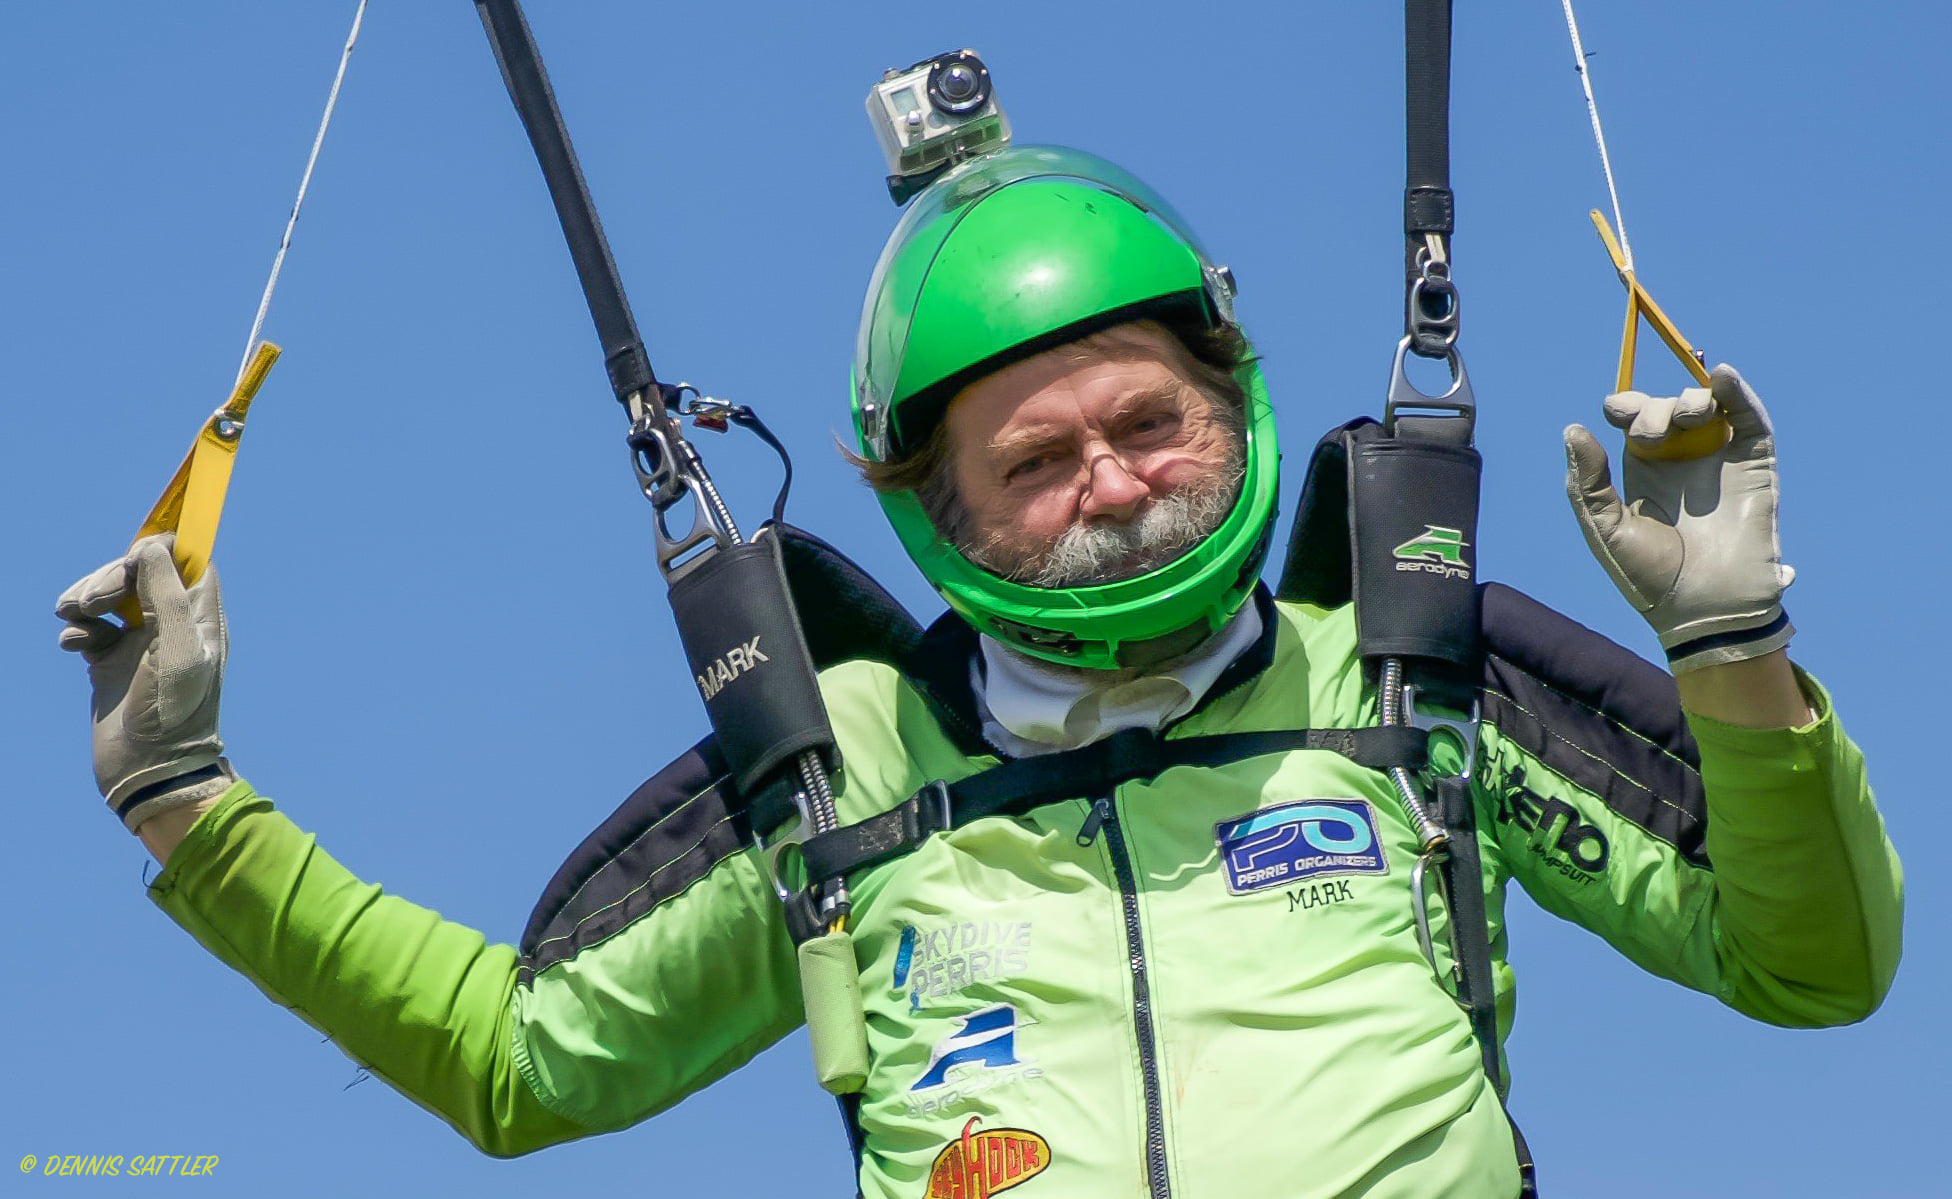 Mark Brown prepares for landing in his signature neon green jumpsuit.